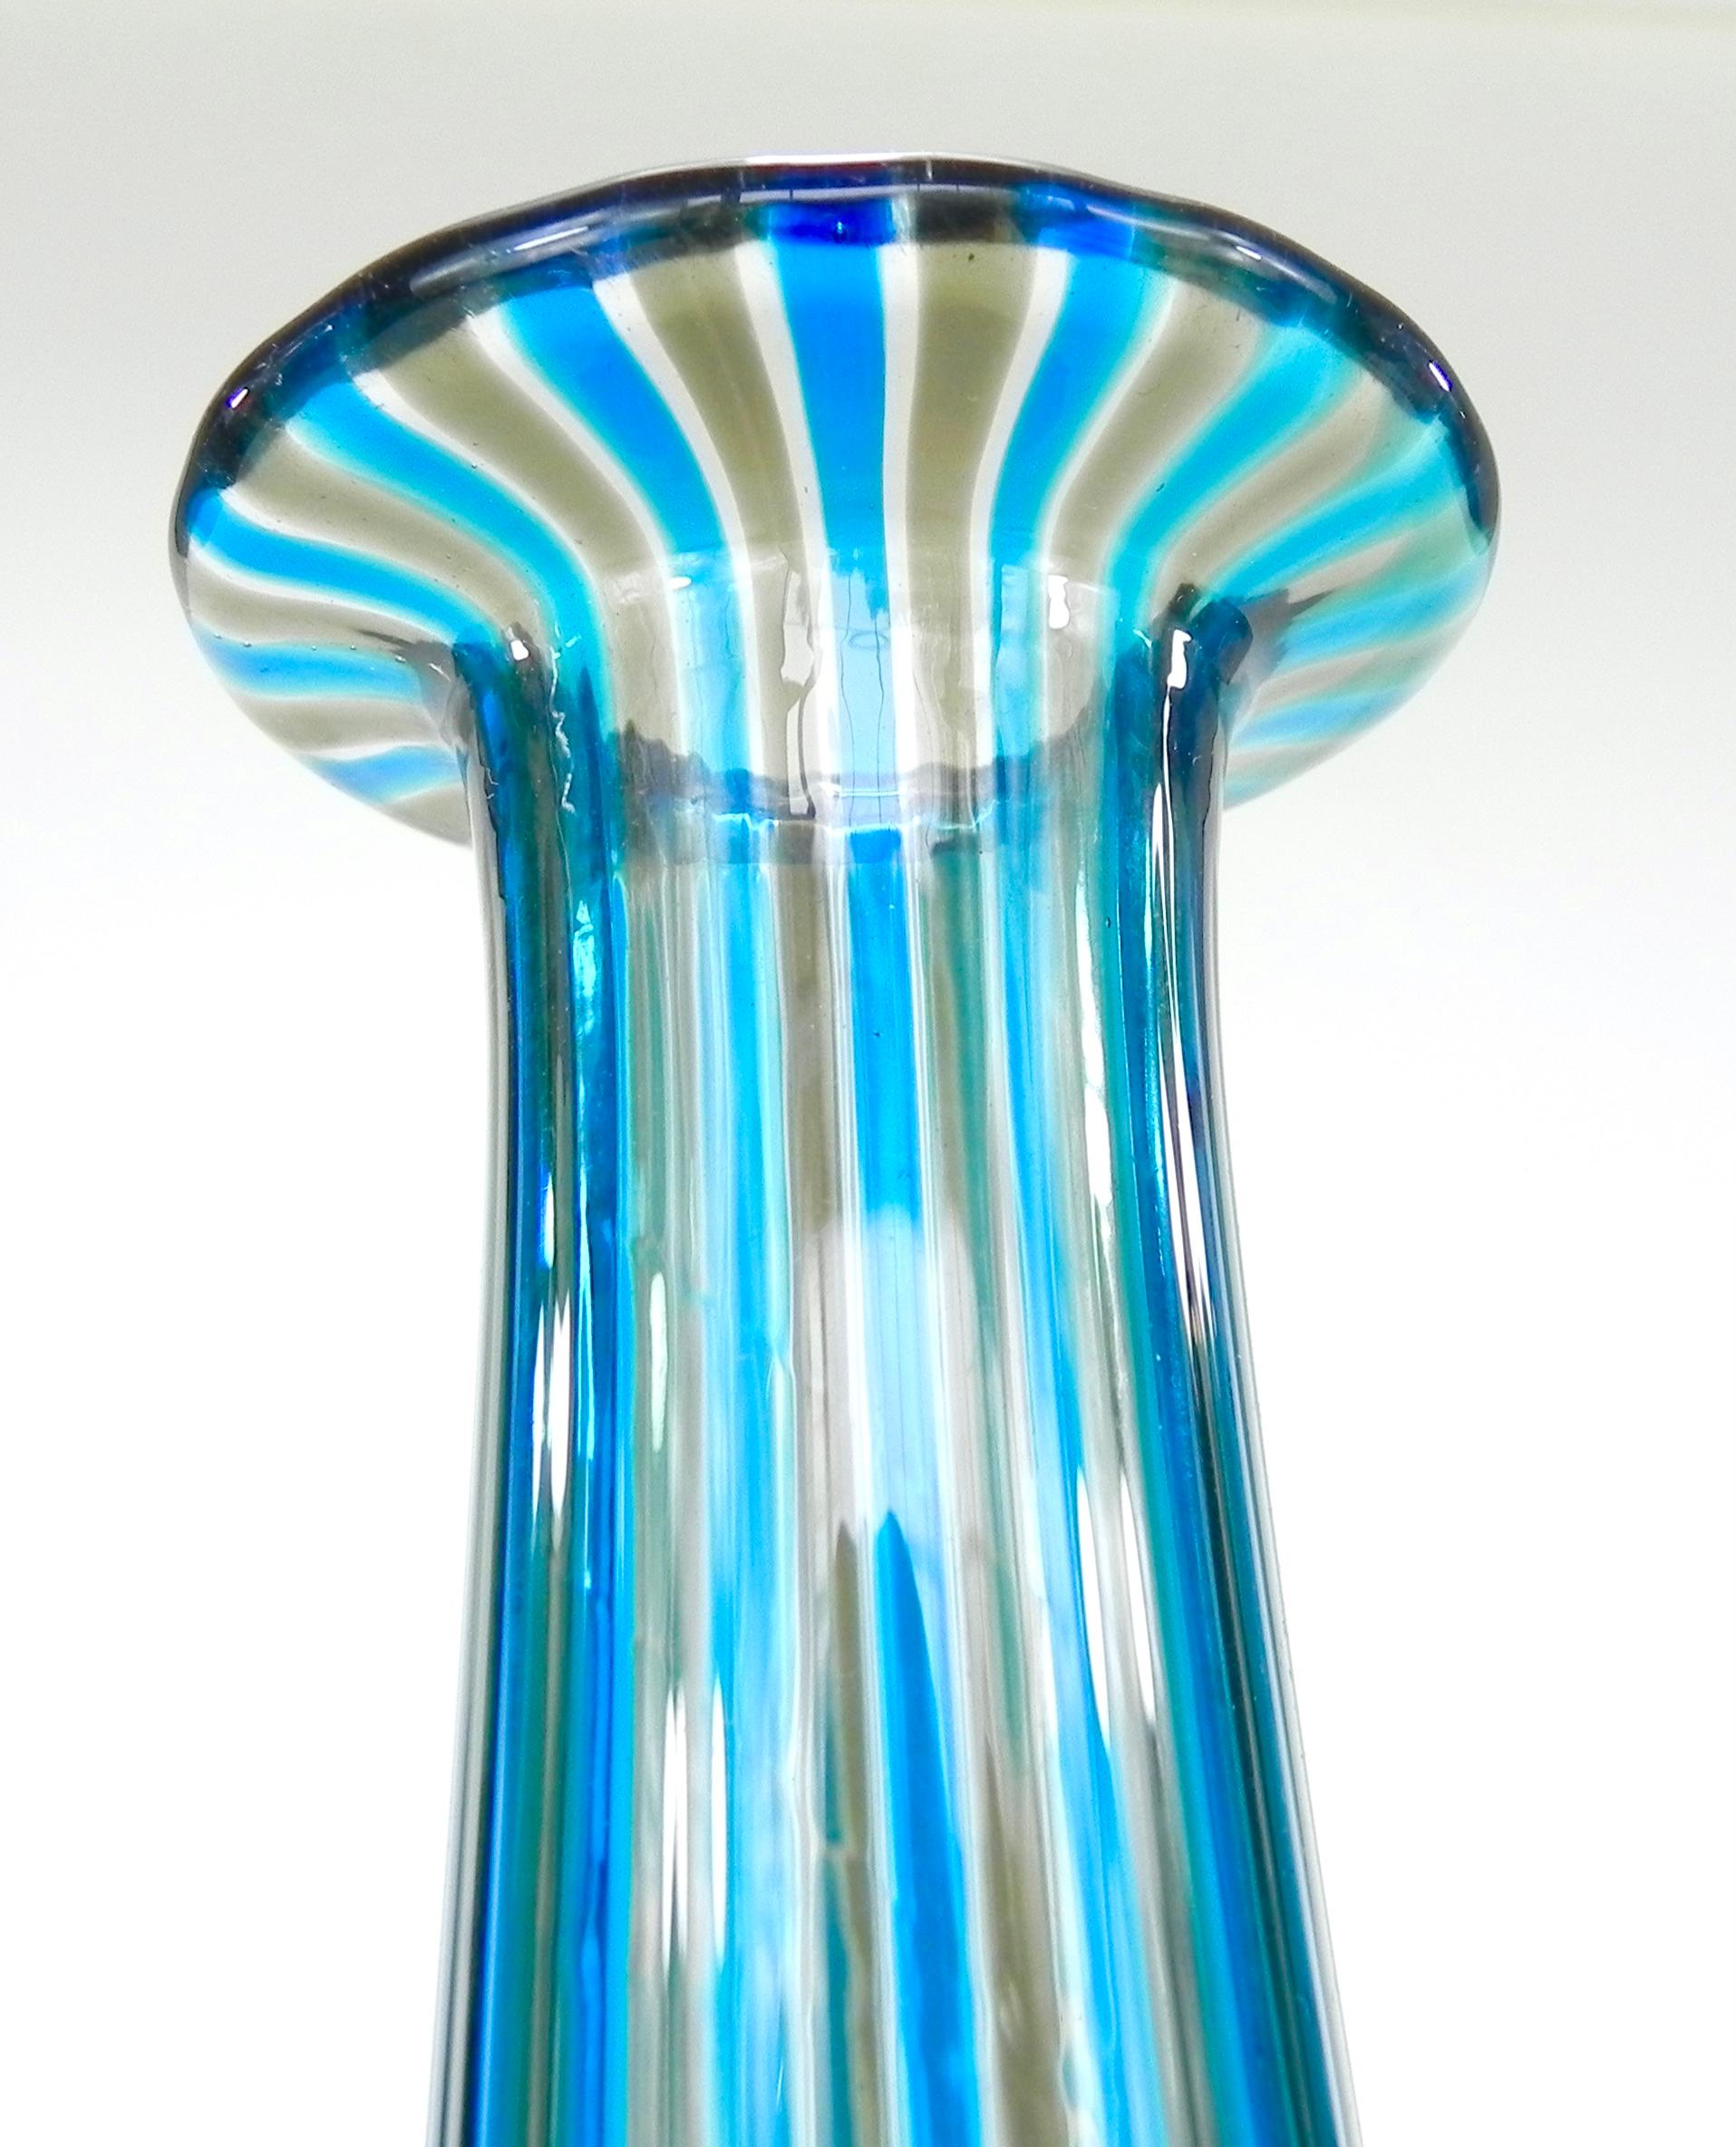 Hand-Crafted Fulvio Bianconi Murano Venini Glass Bottle Vase, 1984 For Sale